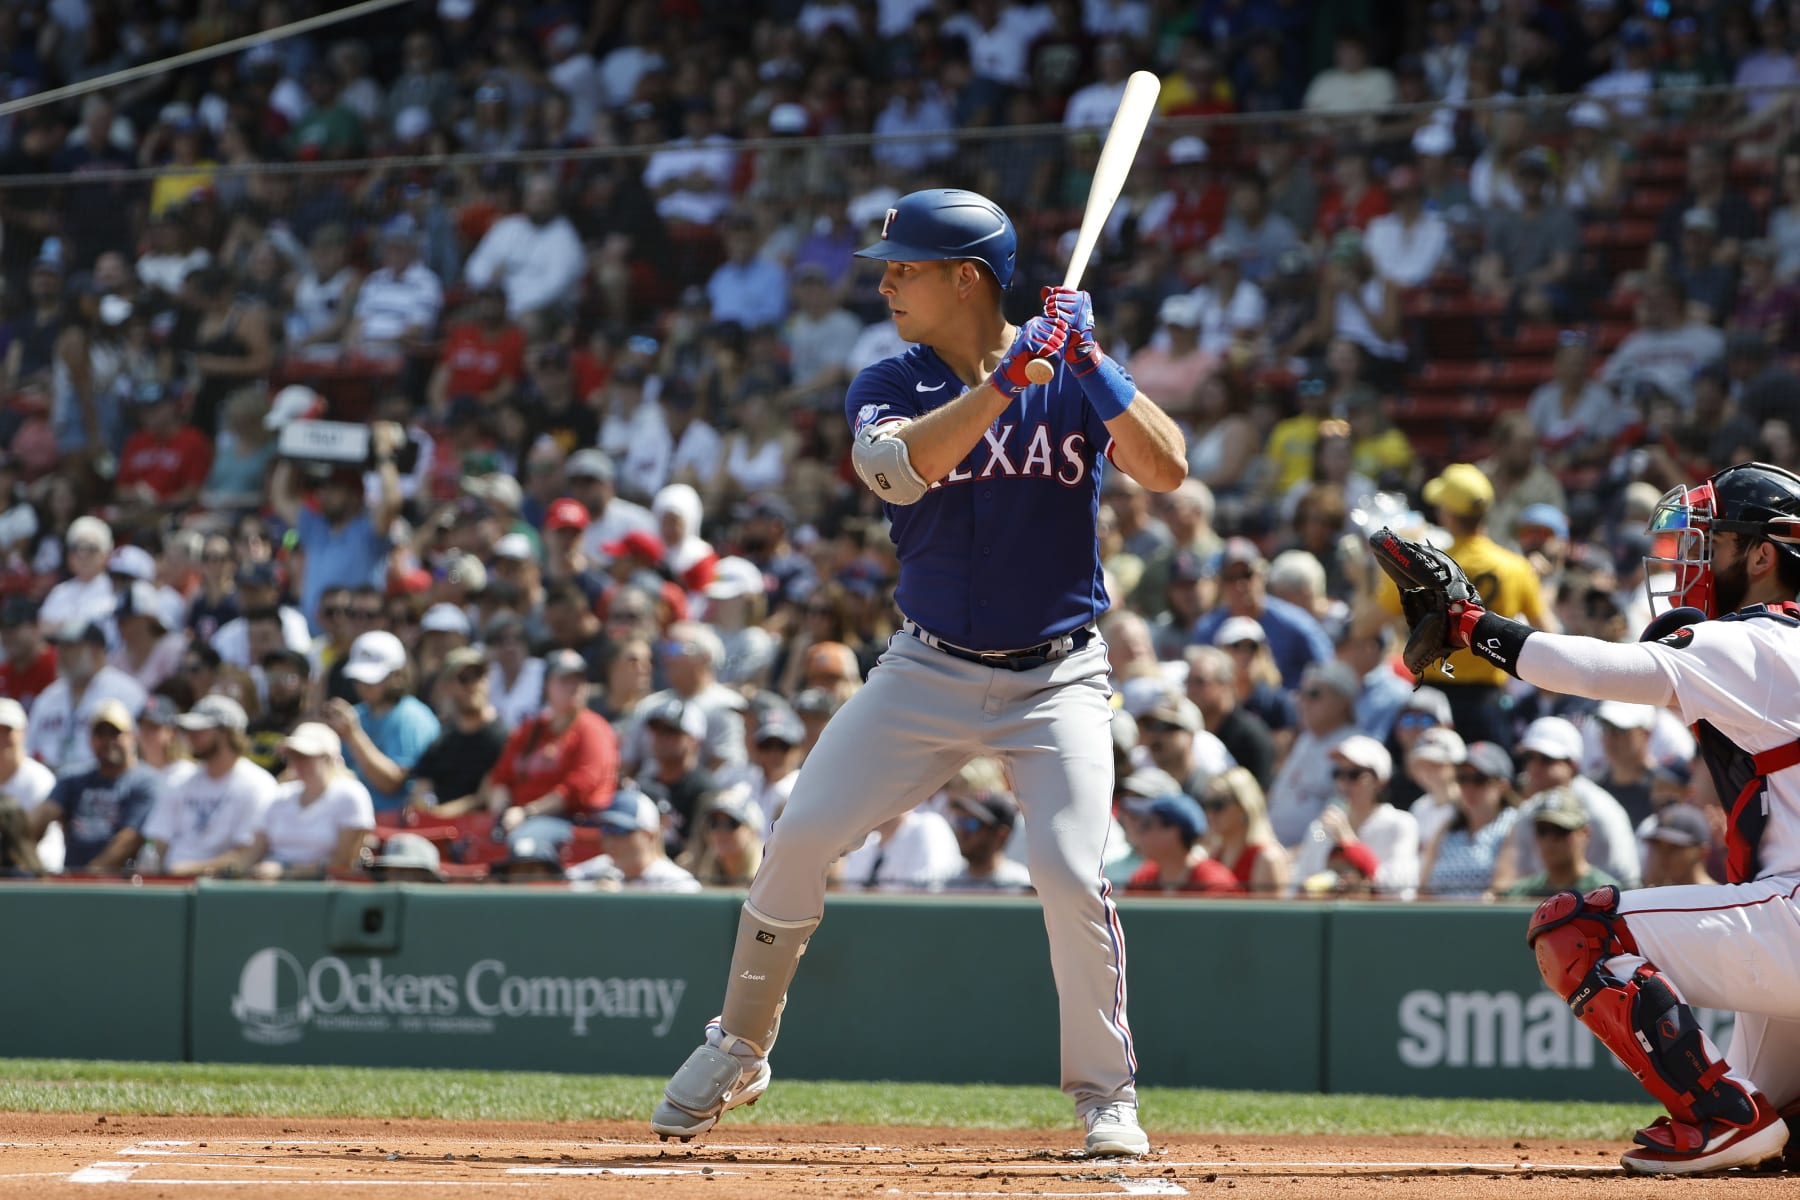 Texas Rangers on X: Garv is hitting .414 over his last 8 games